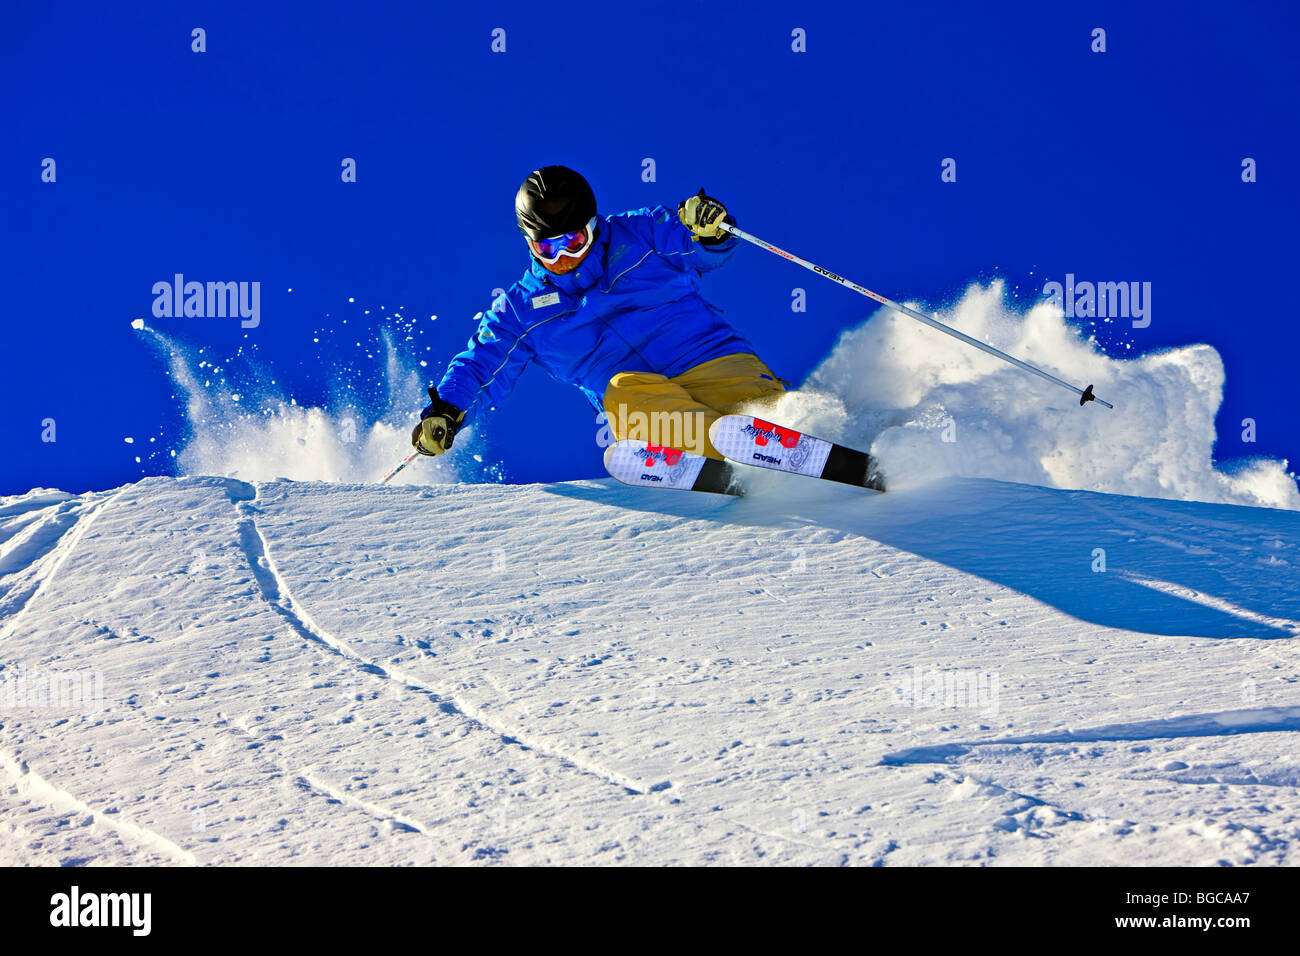 Skier on the upper slopes of Whistler Mountain, Whistler Blackcomb, Whistler, British Columbia, Canada. Stock Photo